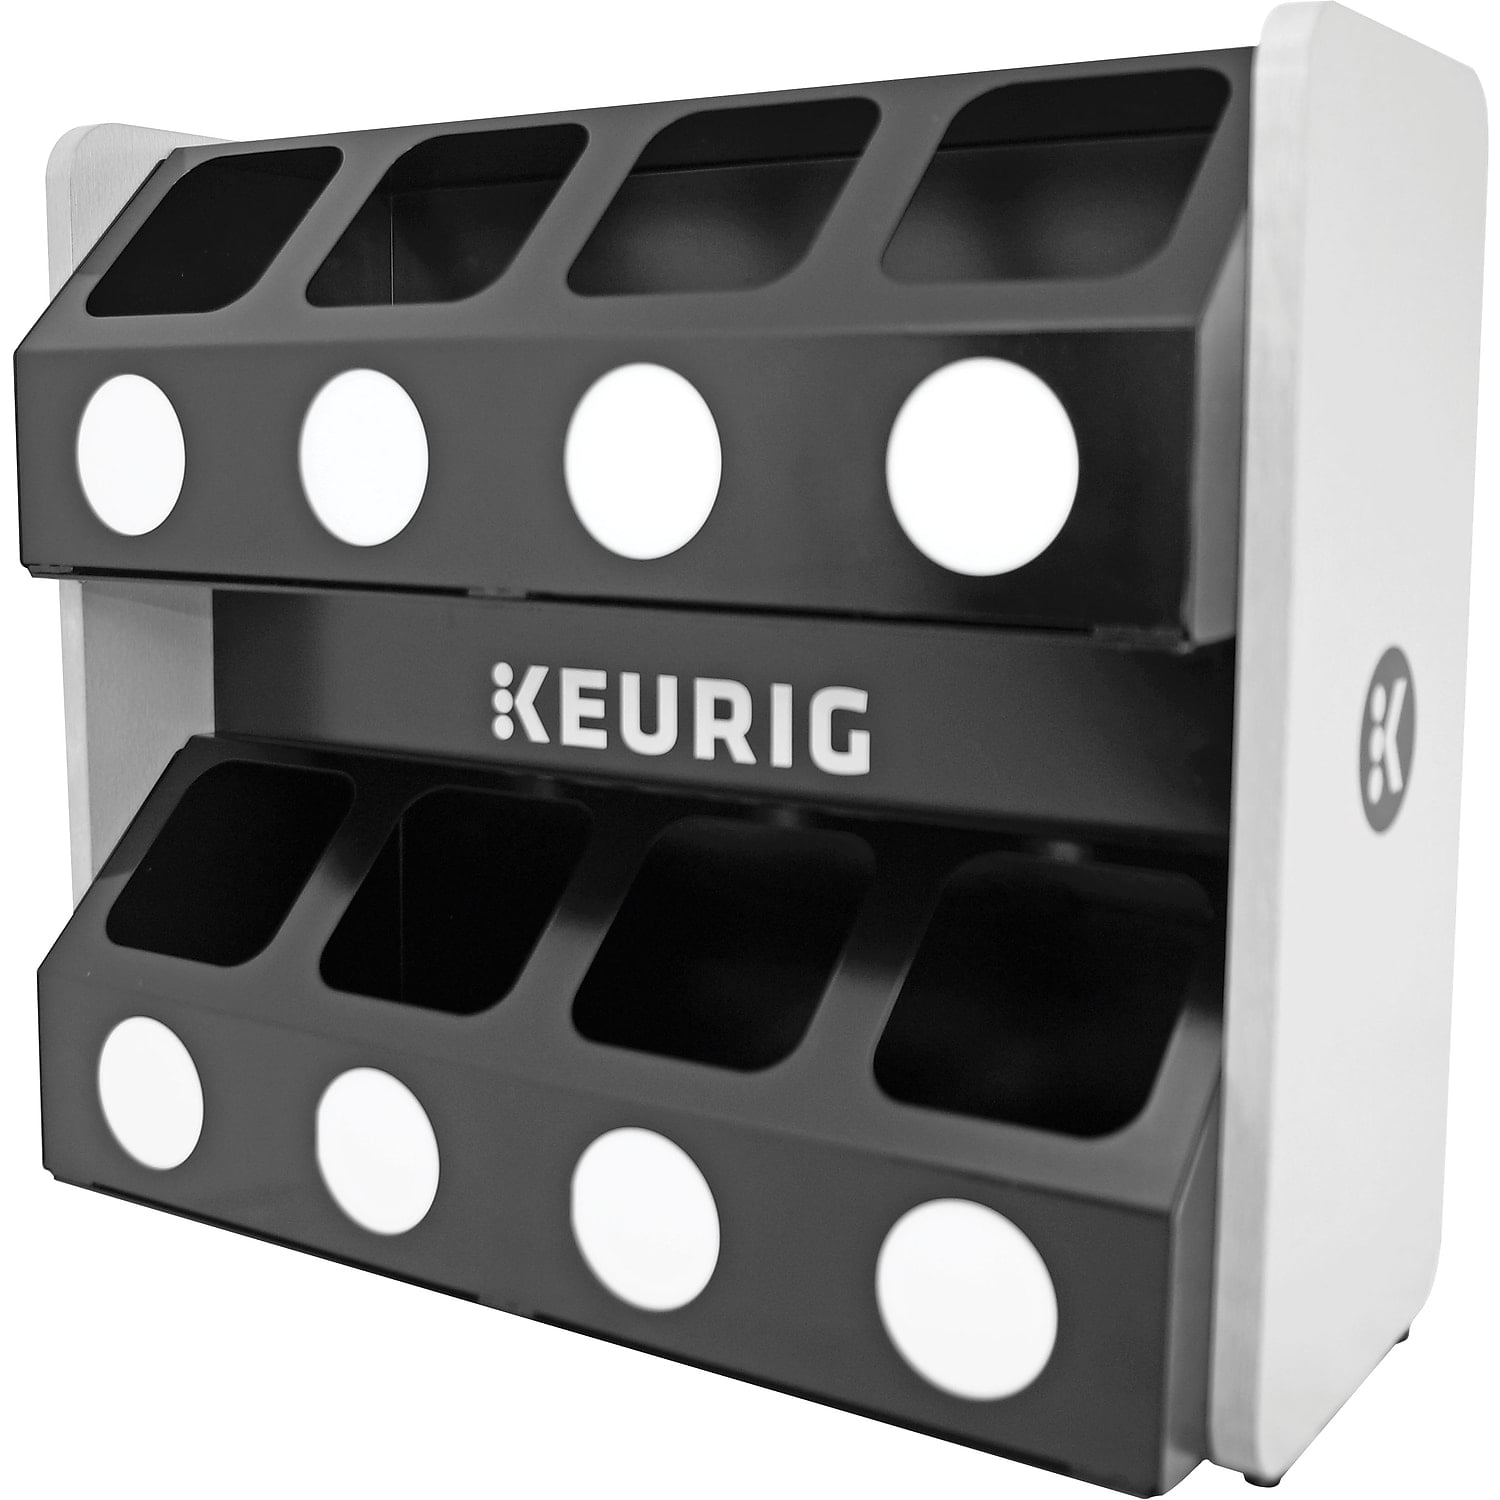 Merchandiser Commercial Displays 8 X 24 CT Boxes Single Serve Pods/K Cups 